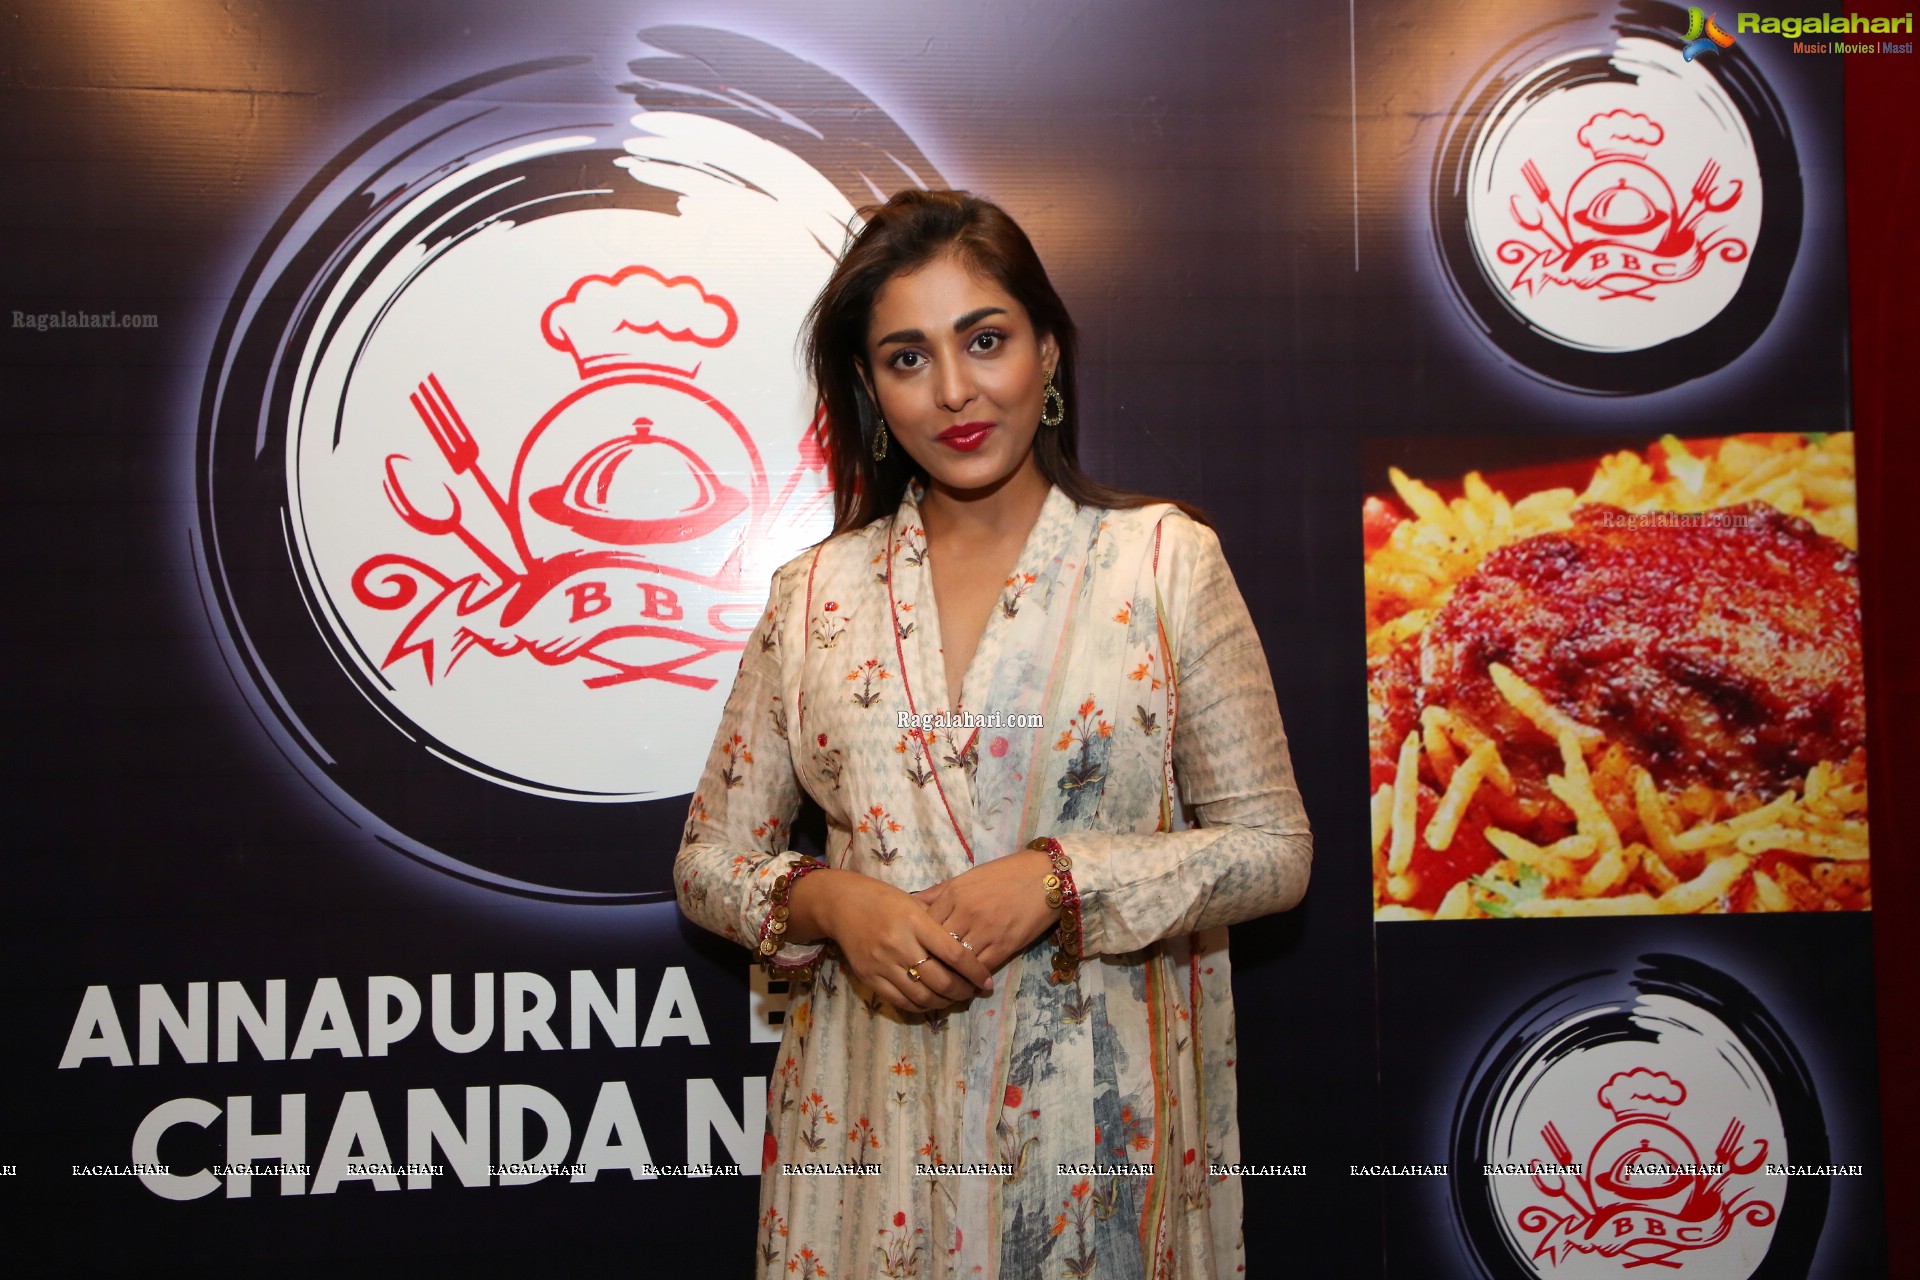 Madhu Shalini at Bahar Biryani Cafe Takeaway Outlet Launch